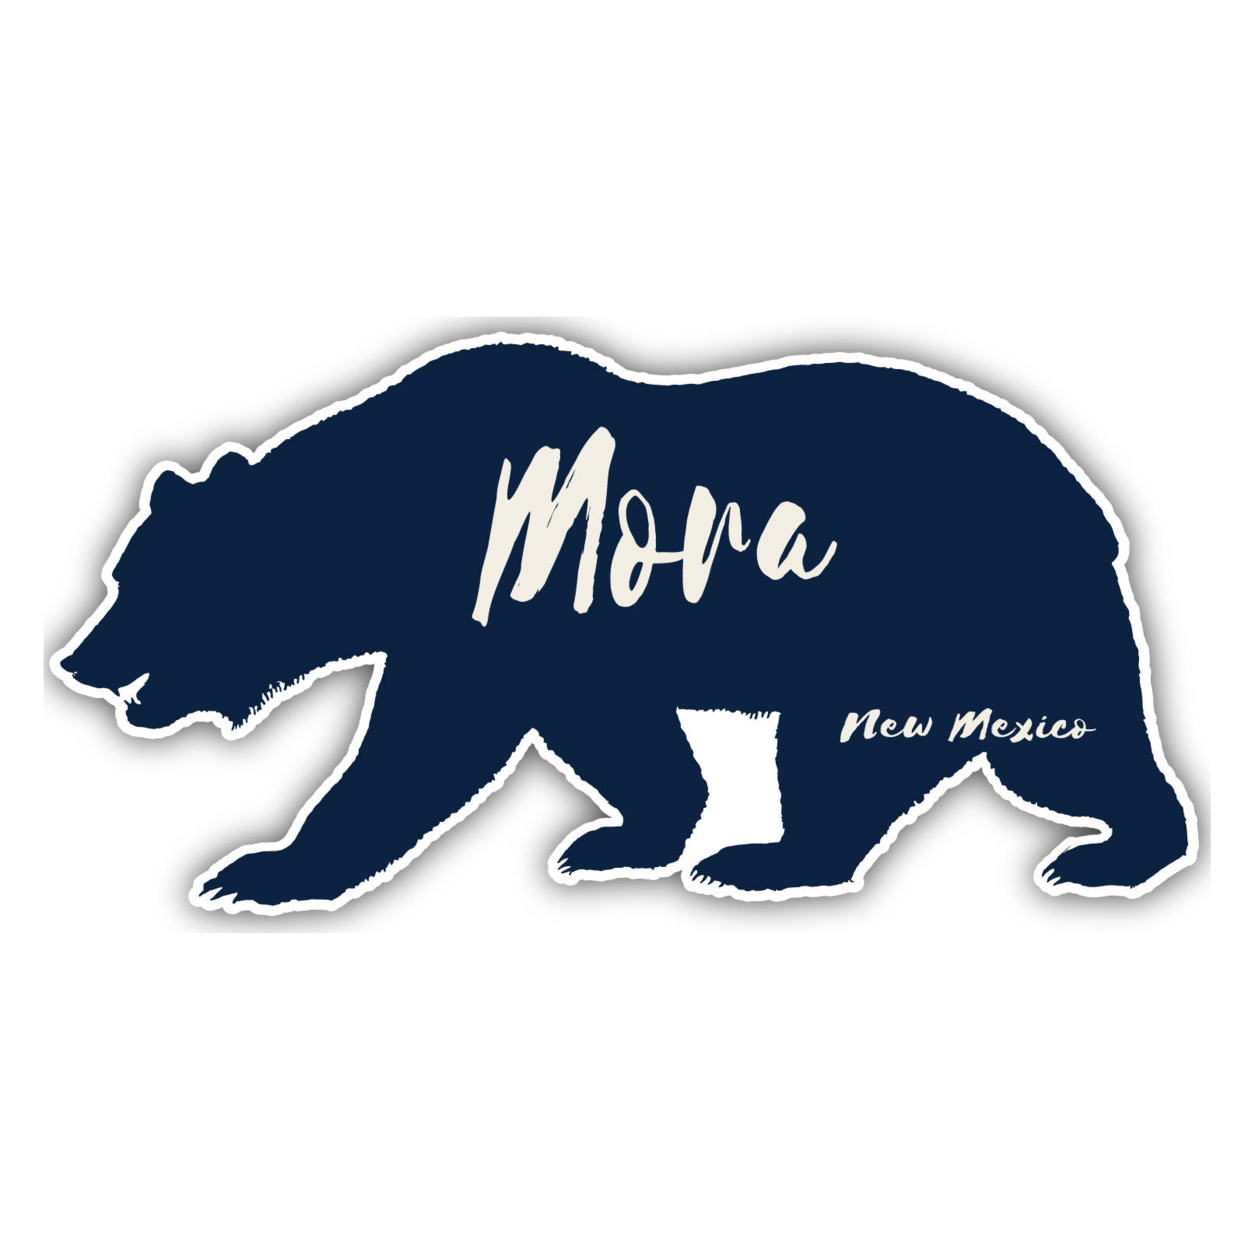 Mora New Mexico Souvenir Decorative Stickers (Choose Theme And Size) - Single Unit, 2-Inch, Bear